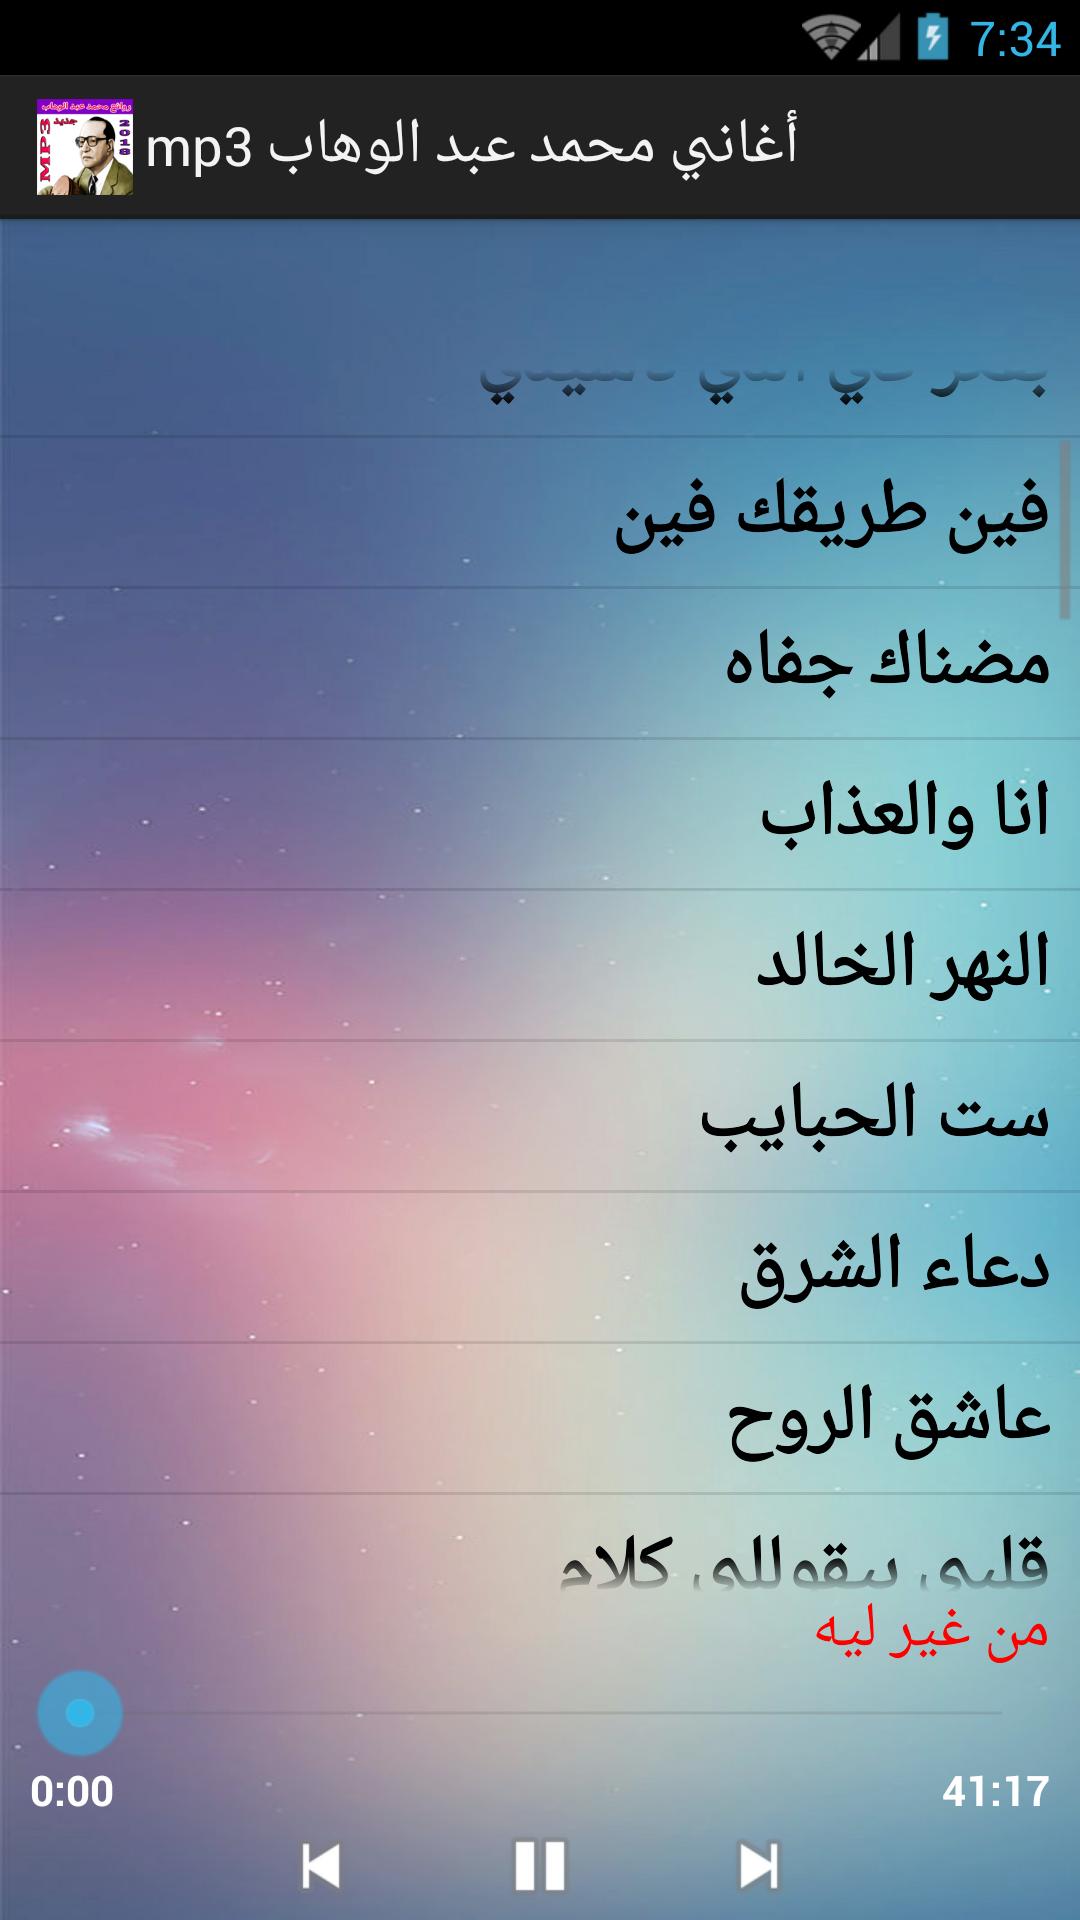 أغاني محمد عبد الوهاب mp3 for Android - APK Download